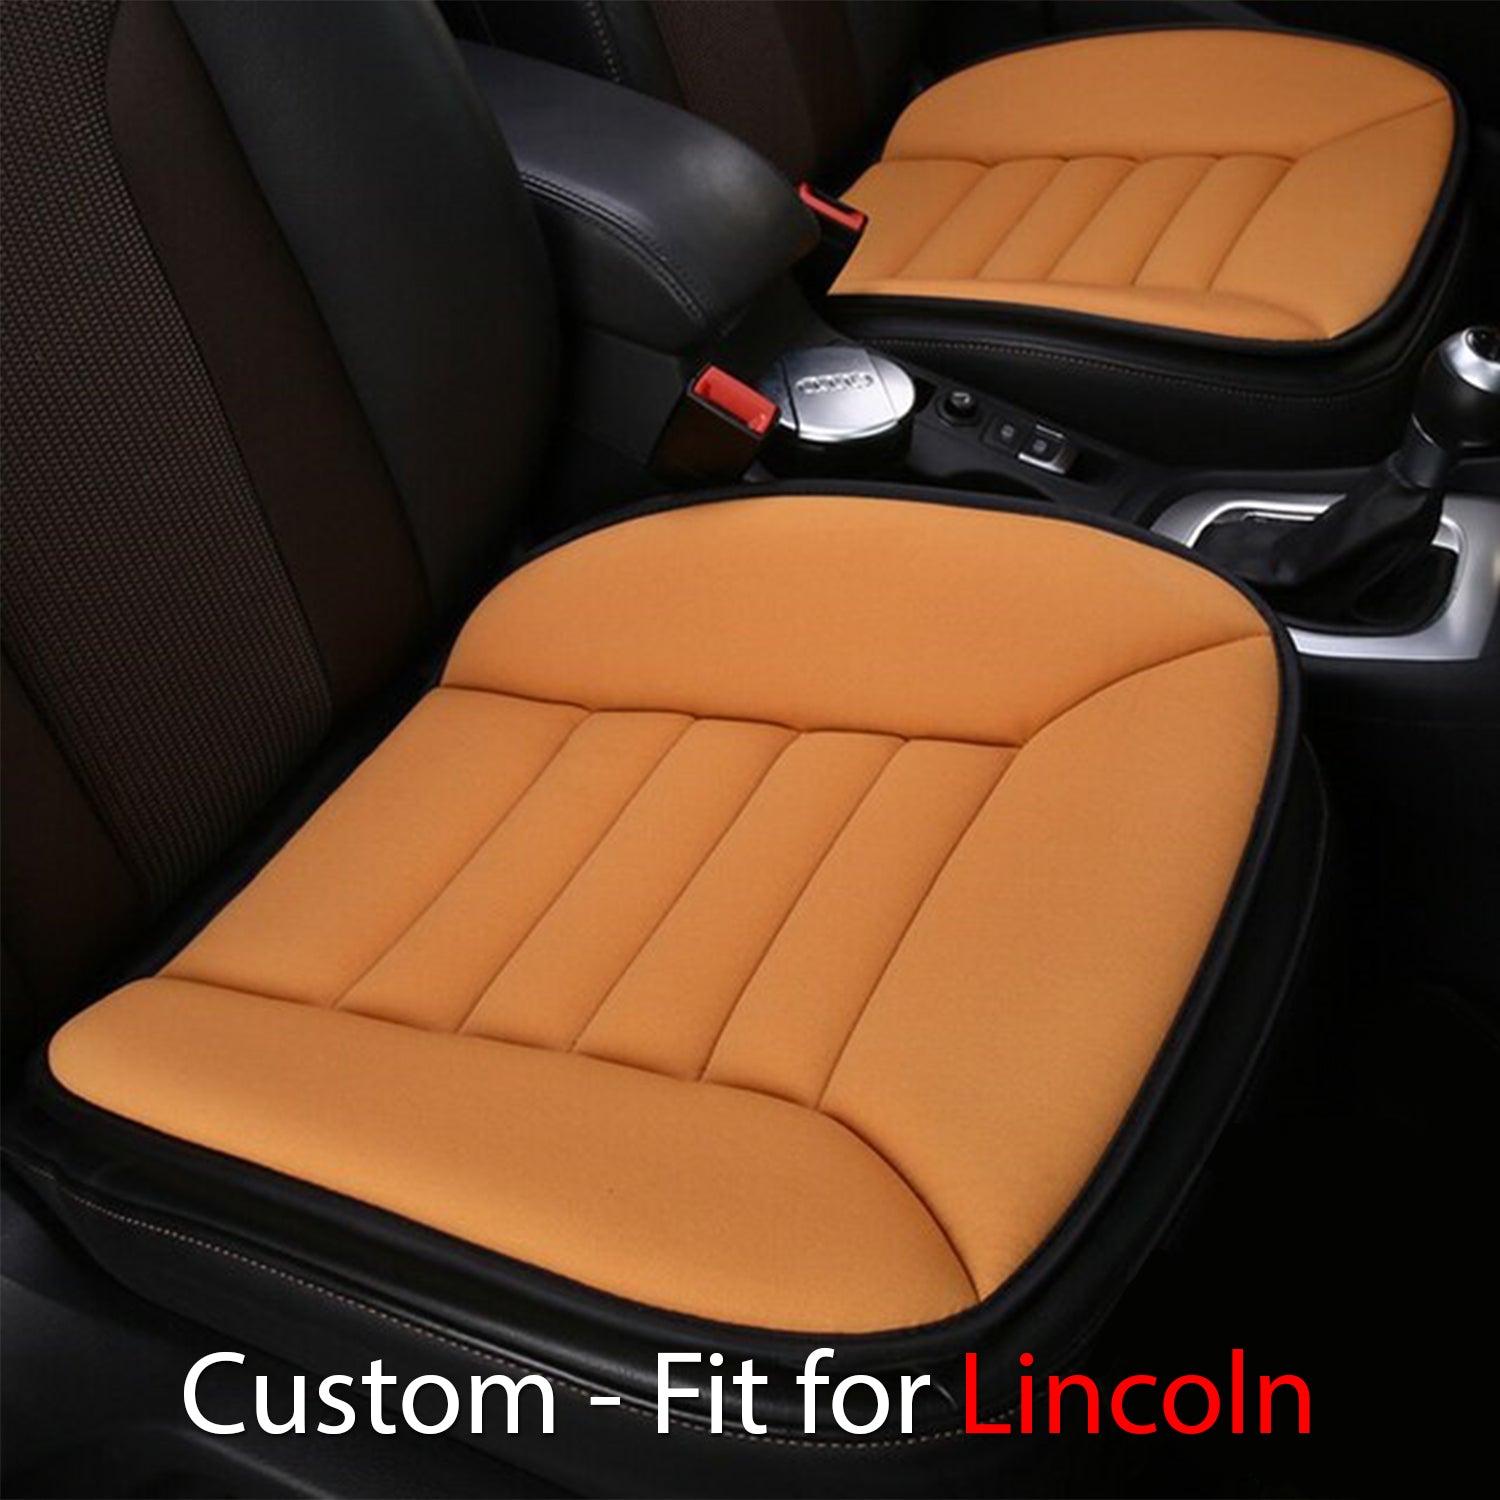 Car Seat Cushion with 1.2inch Comfort Memory Foam, Custom-Fit For Car, Seat Cushion for Car and Office Chair DLLI247